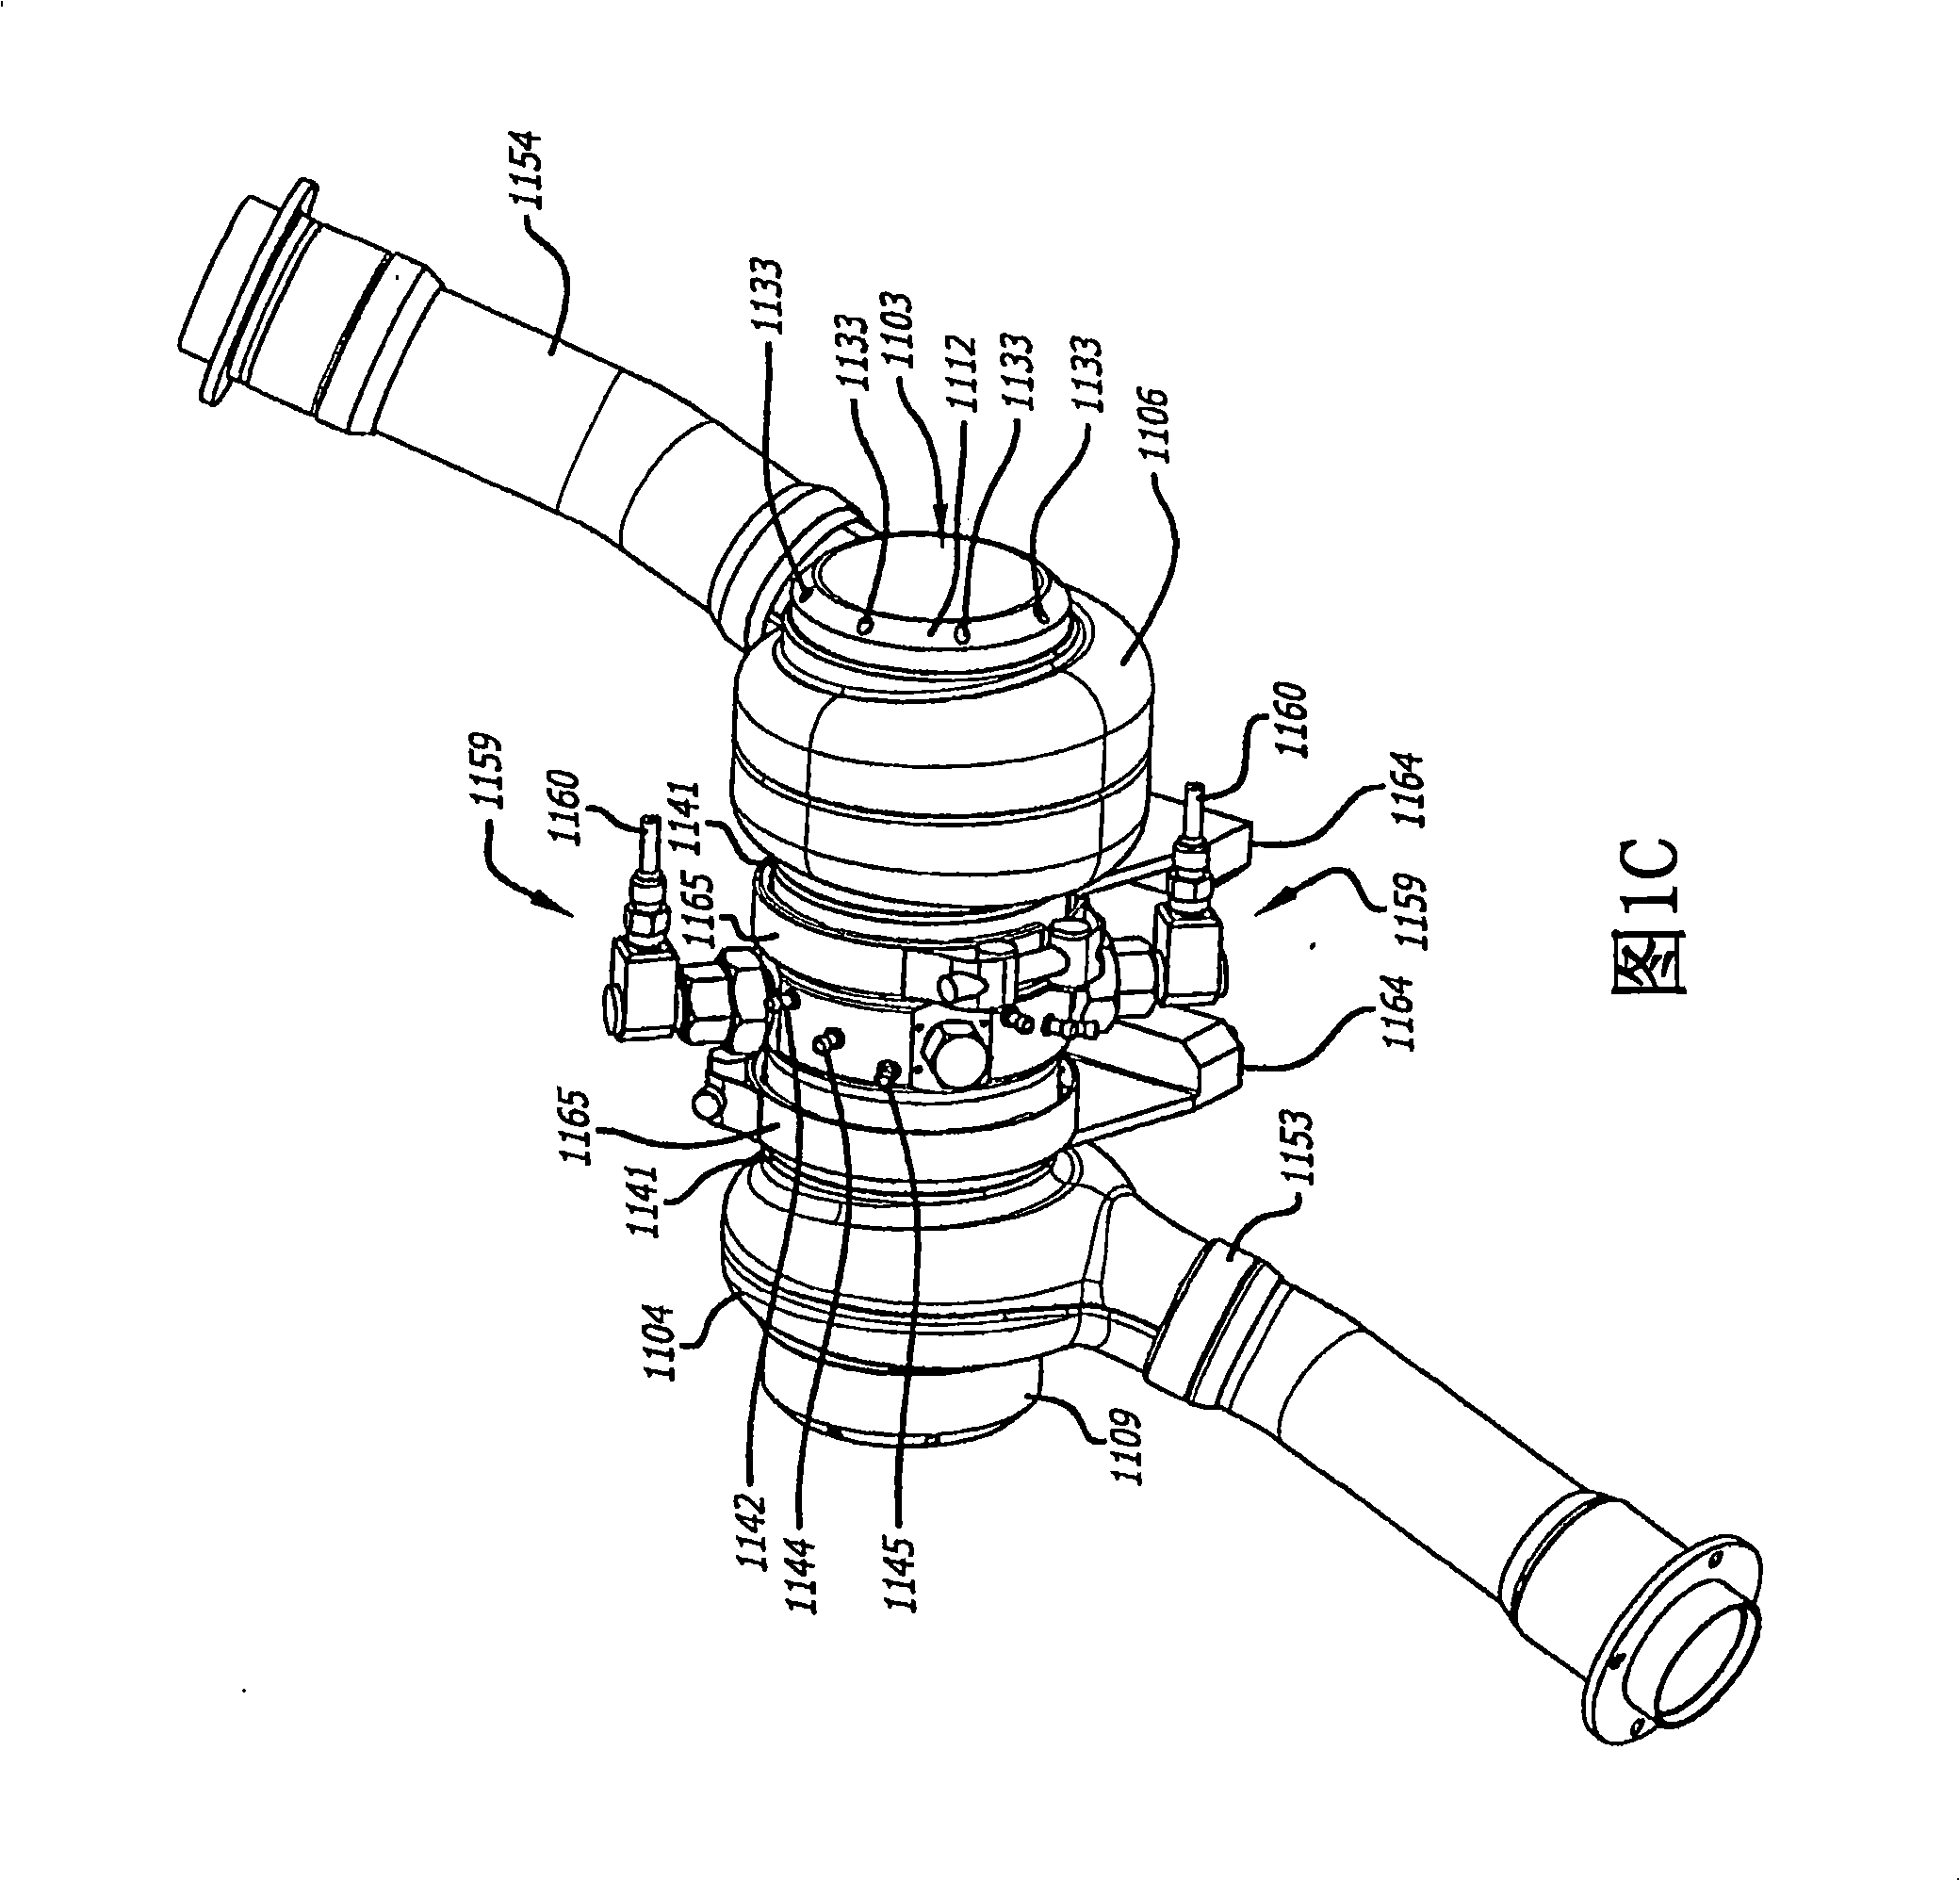 Opposed piston engine